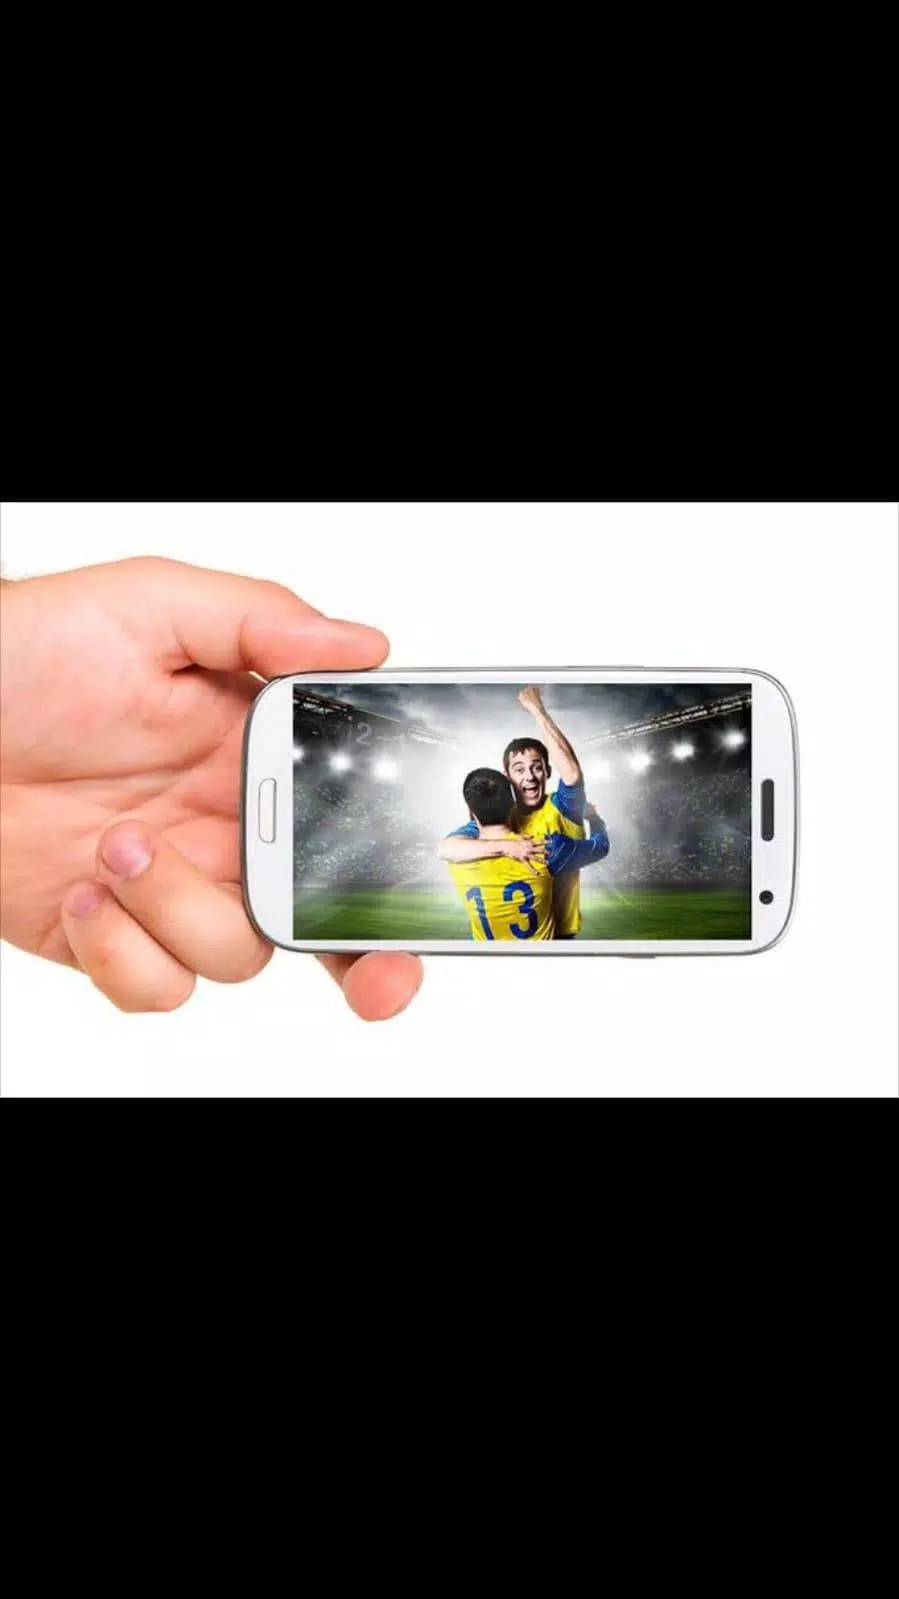 Download futemax - futebol ao vivo Guia android on PC